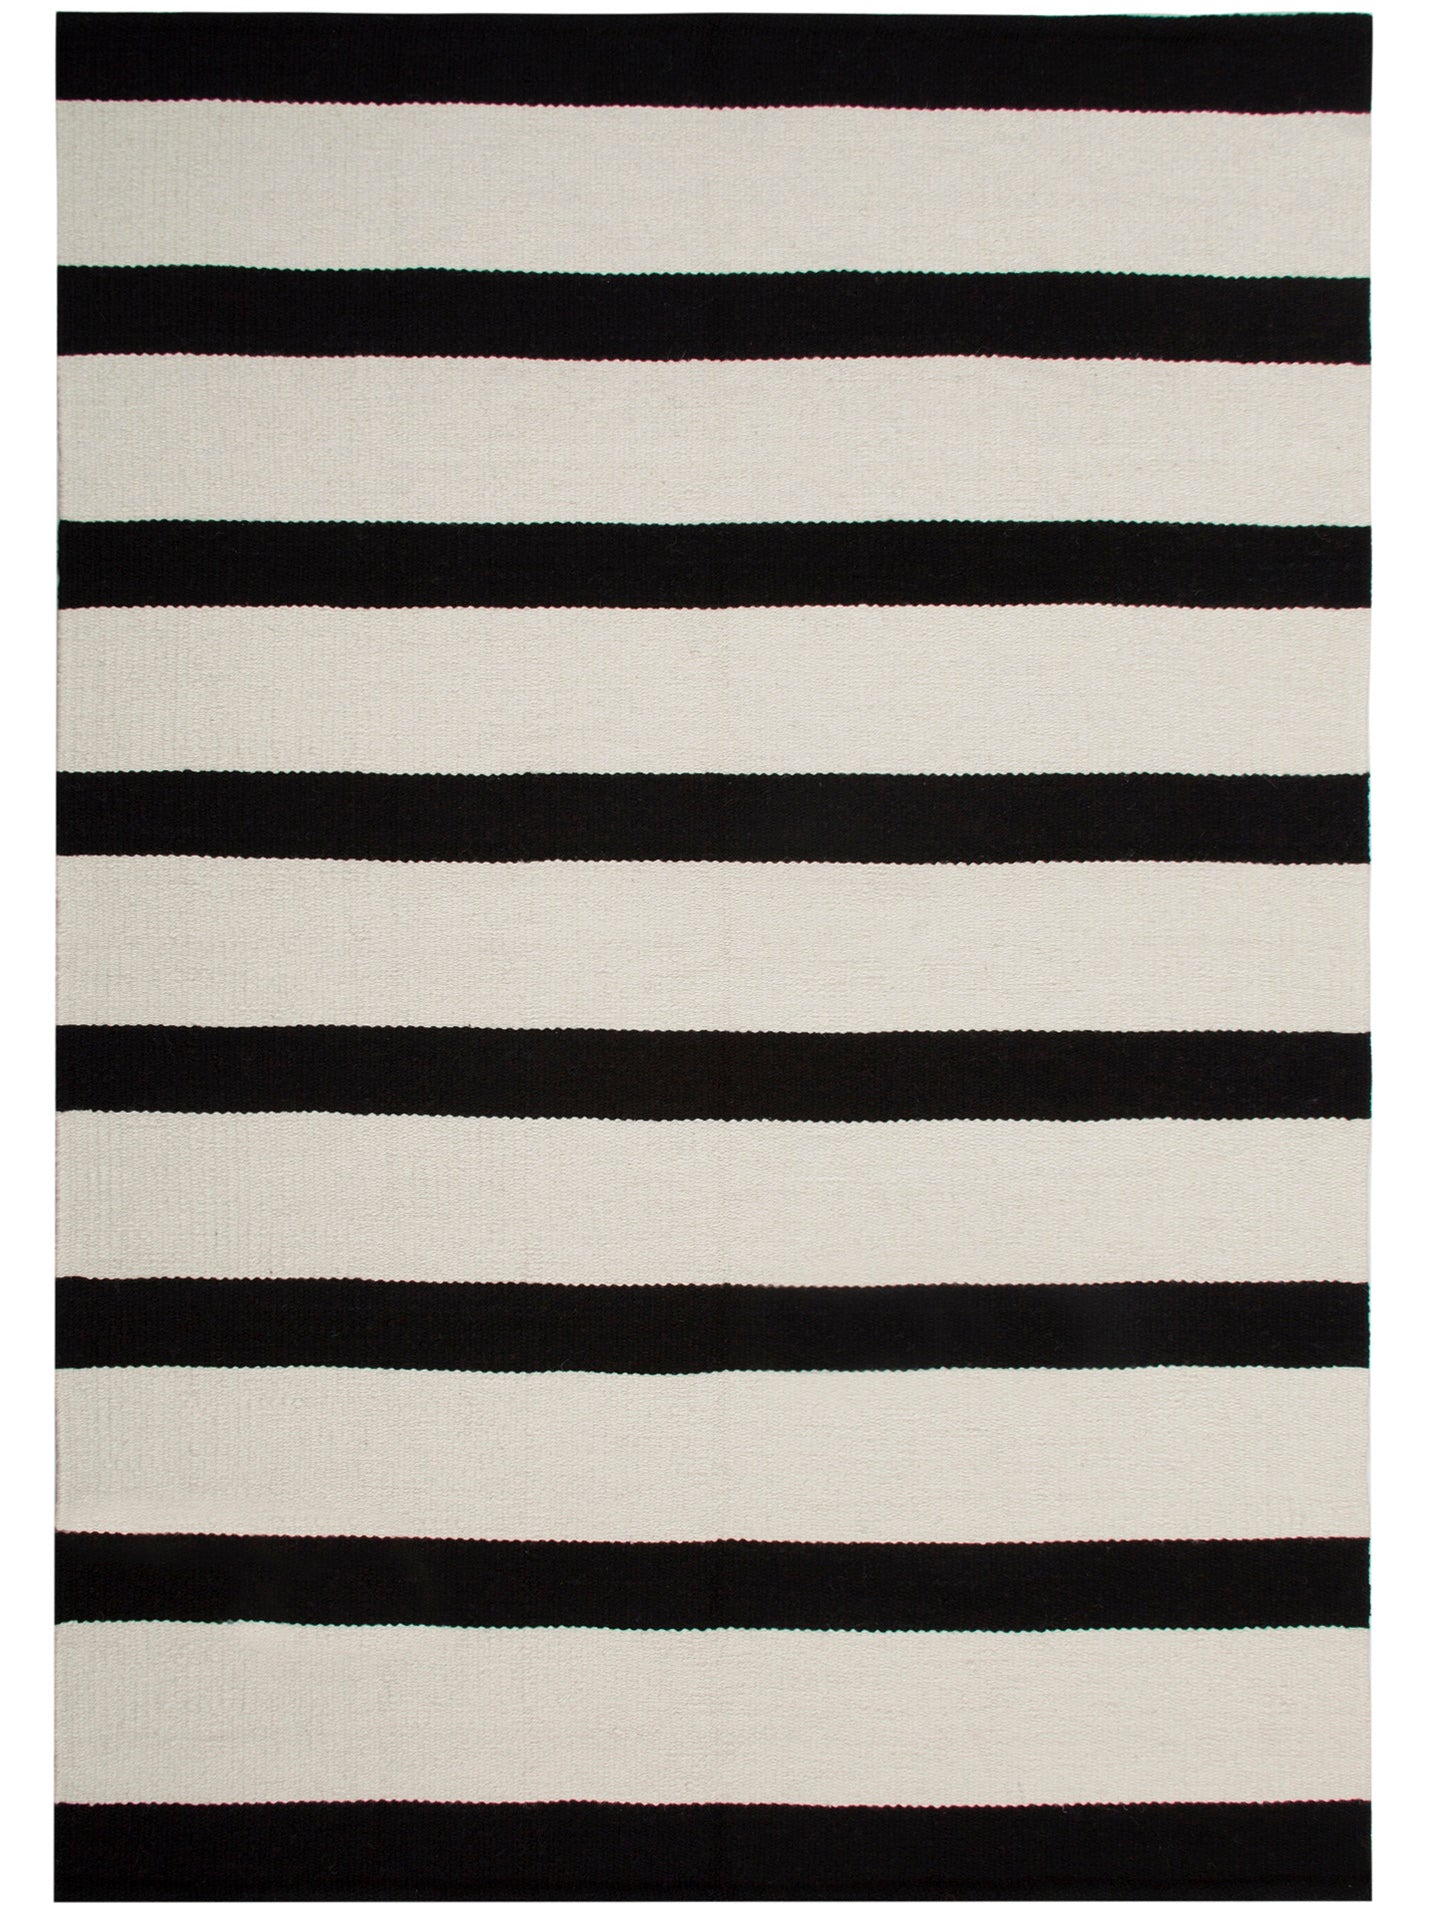 Striped Black & Natural